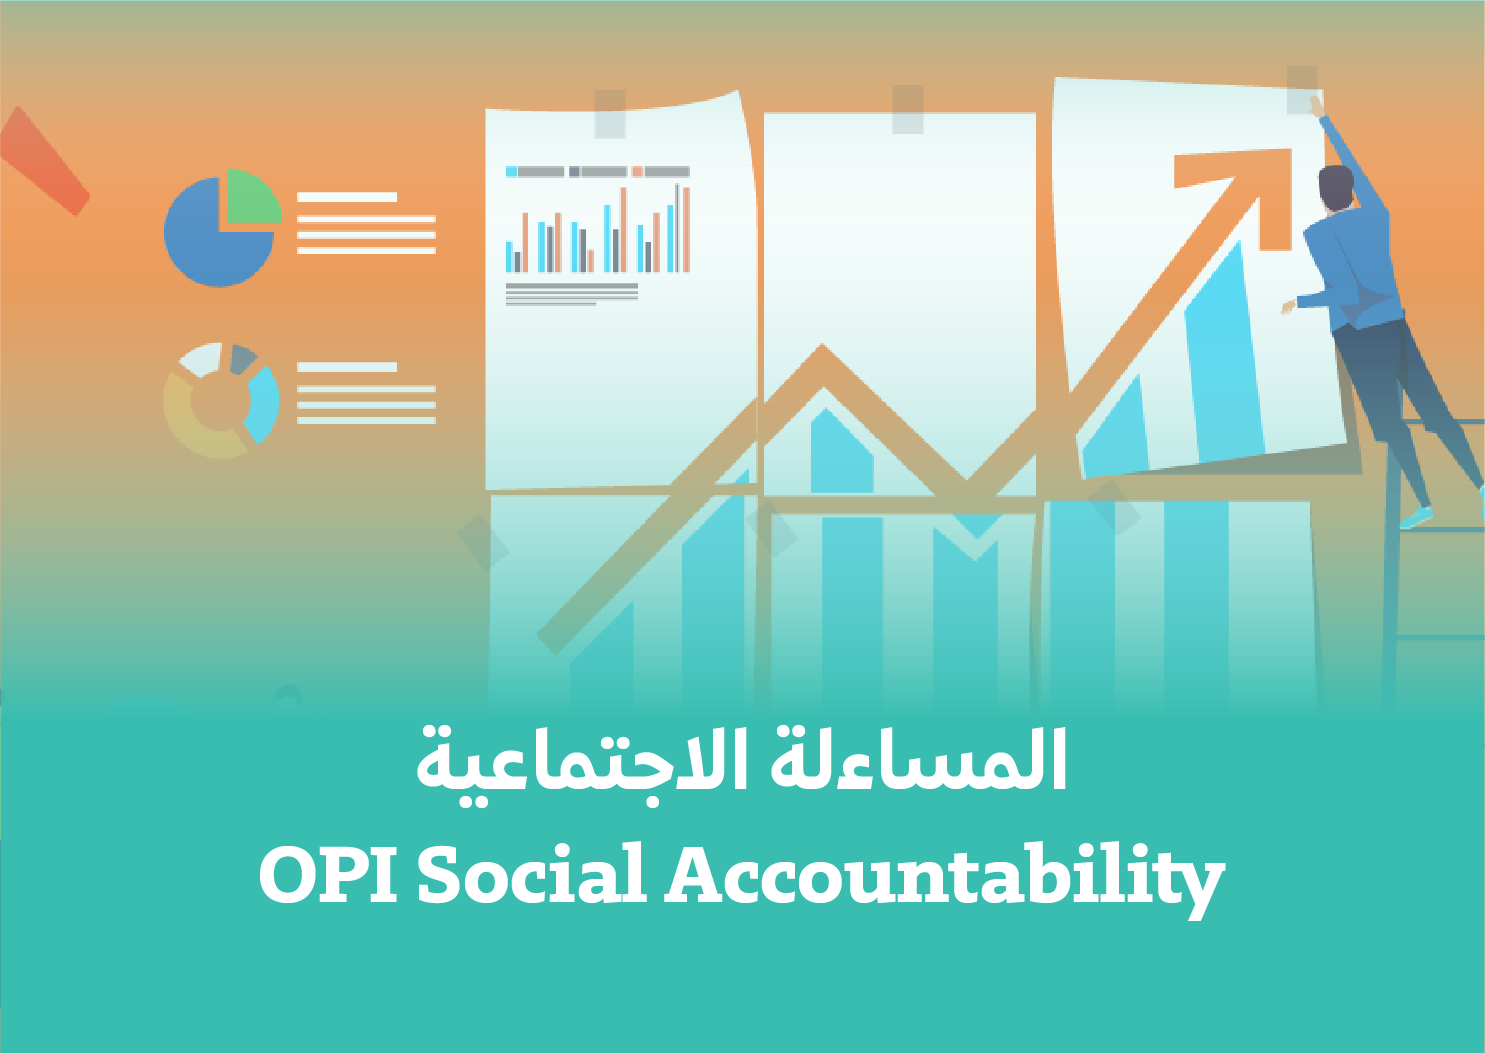 OPI Social Accountability